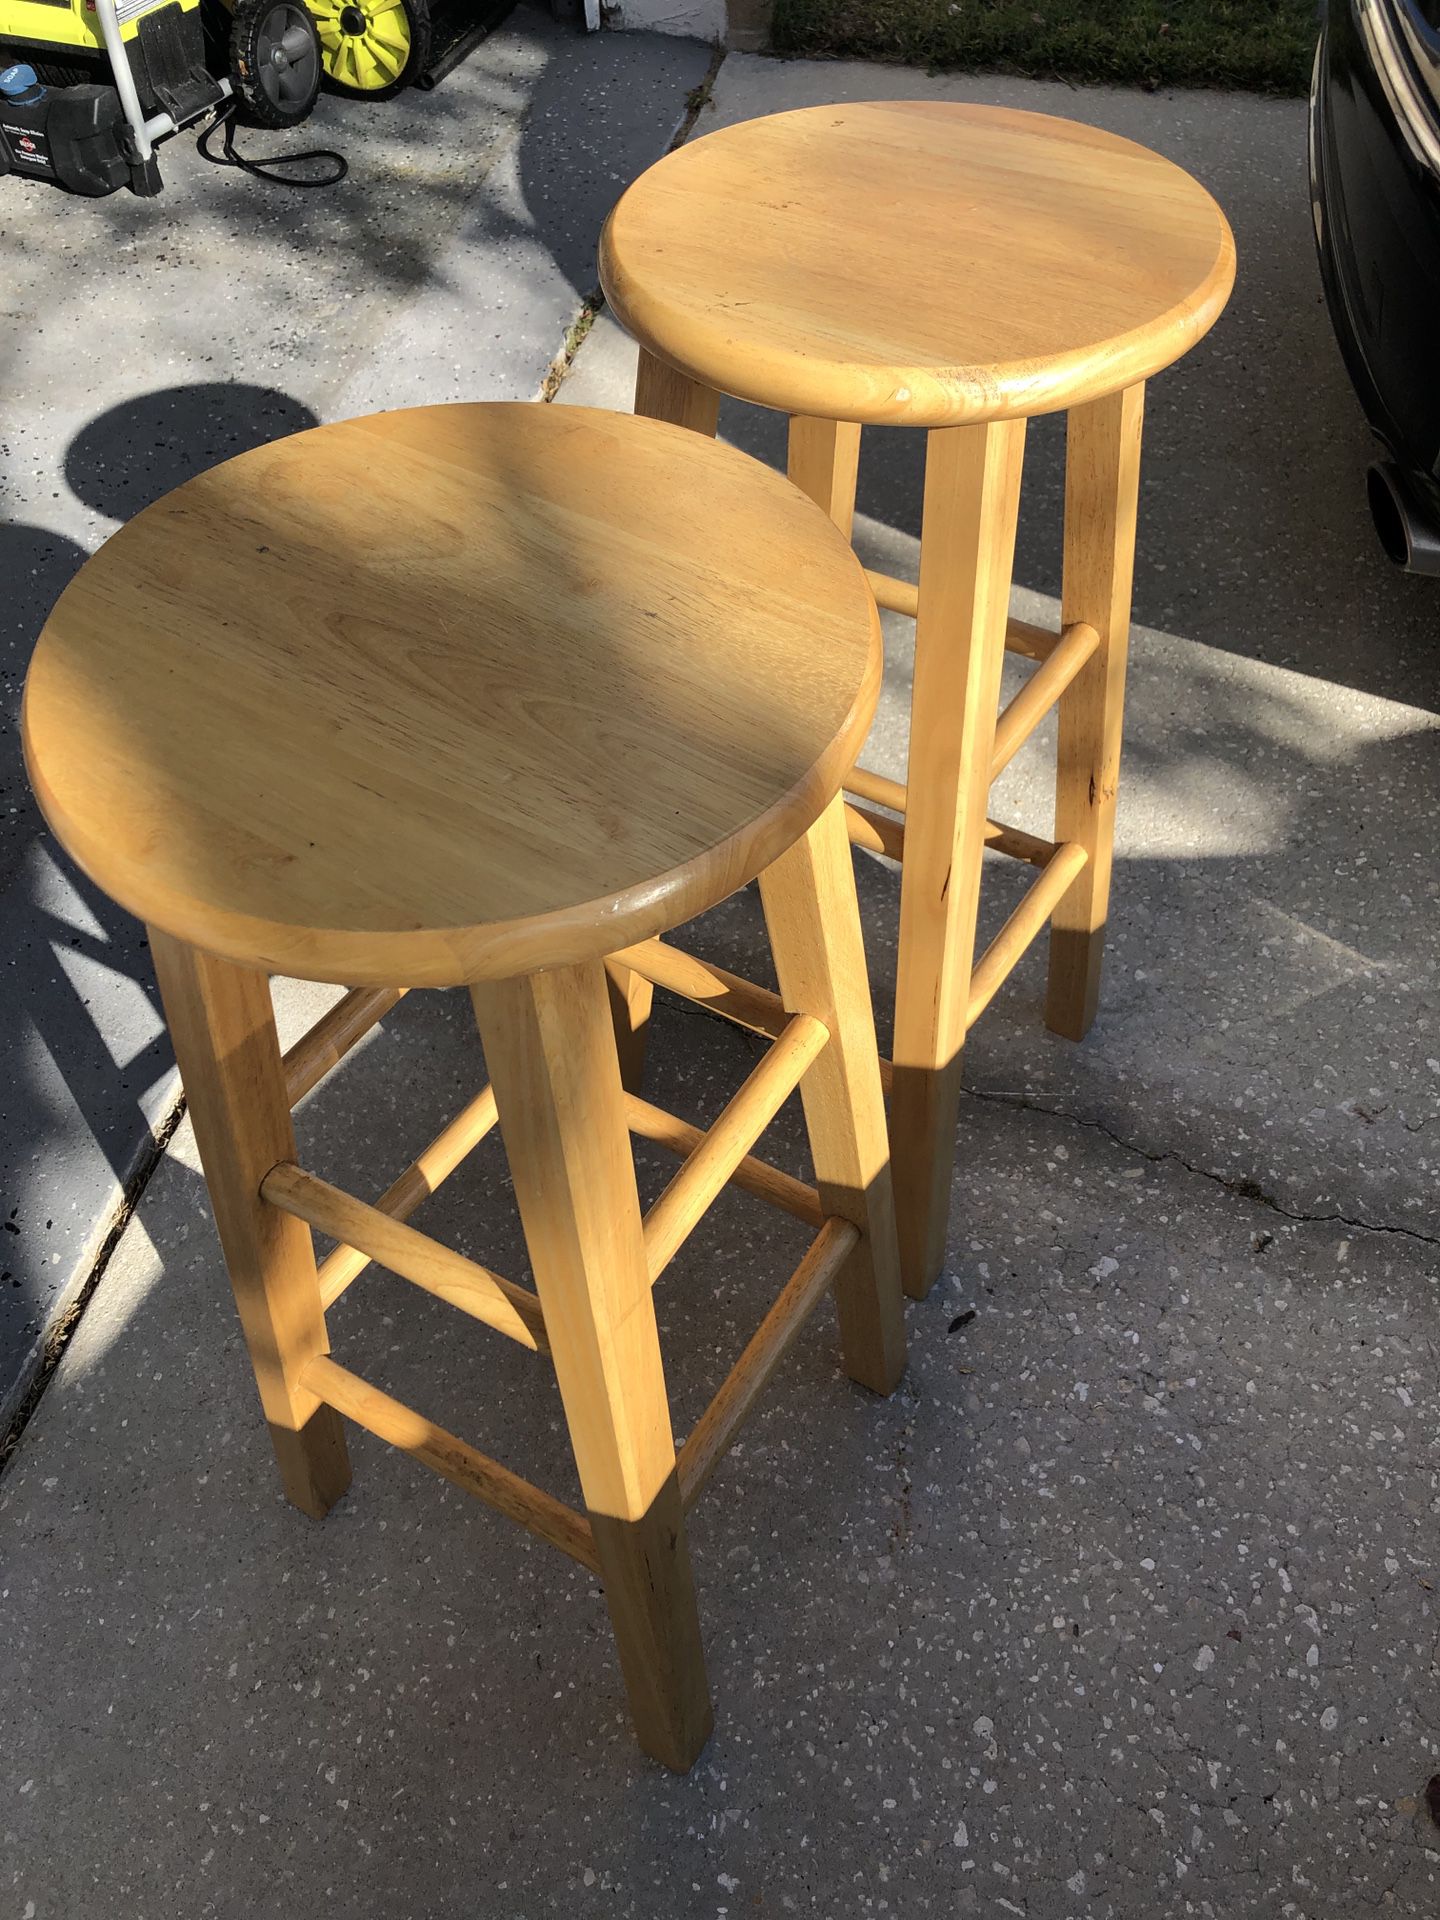 Wood stools pair